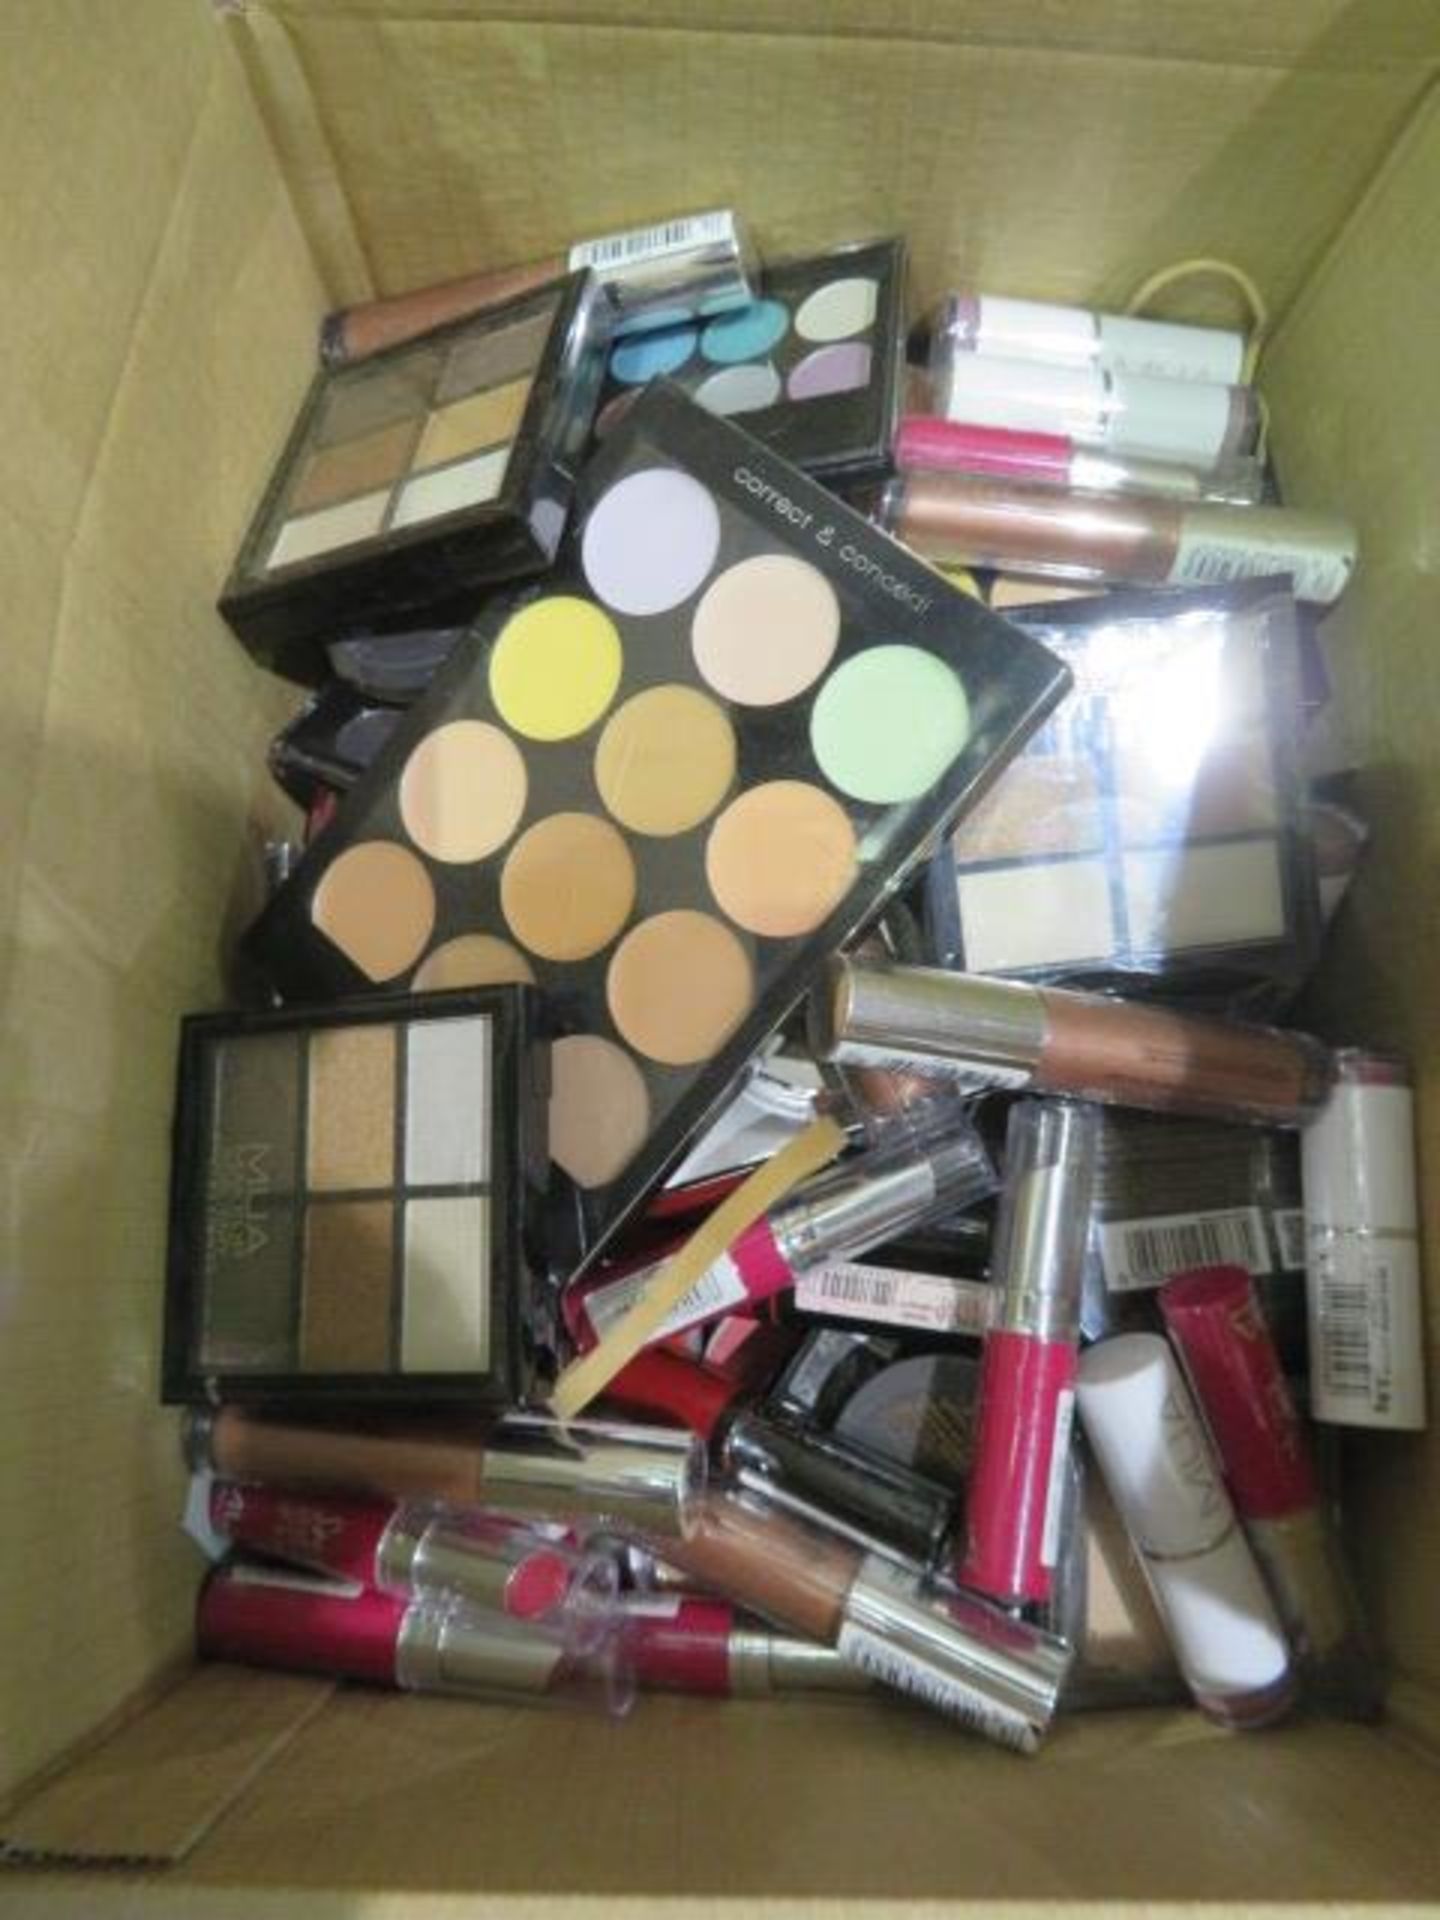 Circa. 200 items of various new make up acadamy make up to include: sweet sheen lip balm, 6 sha...